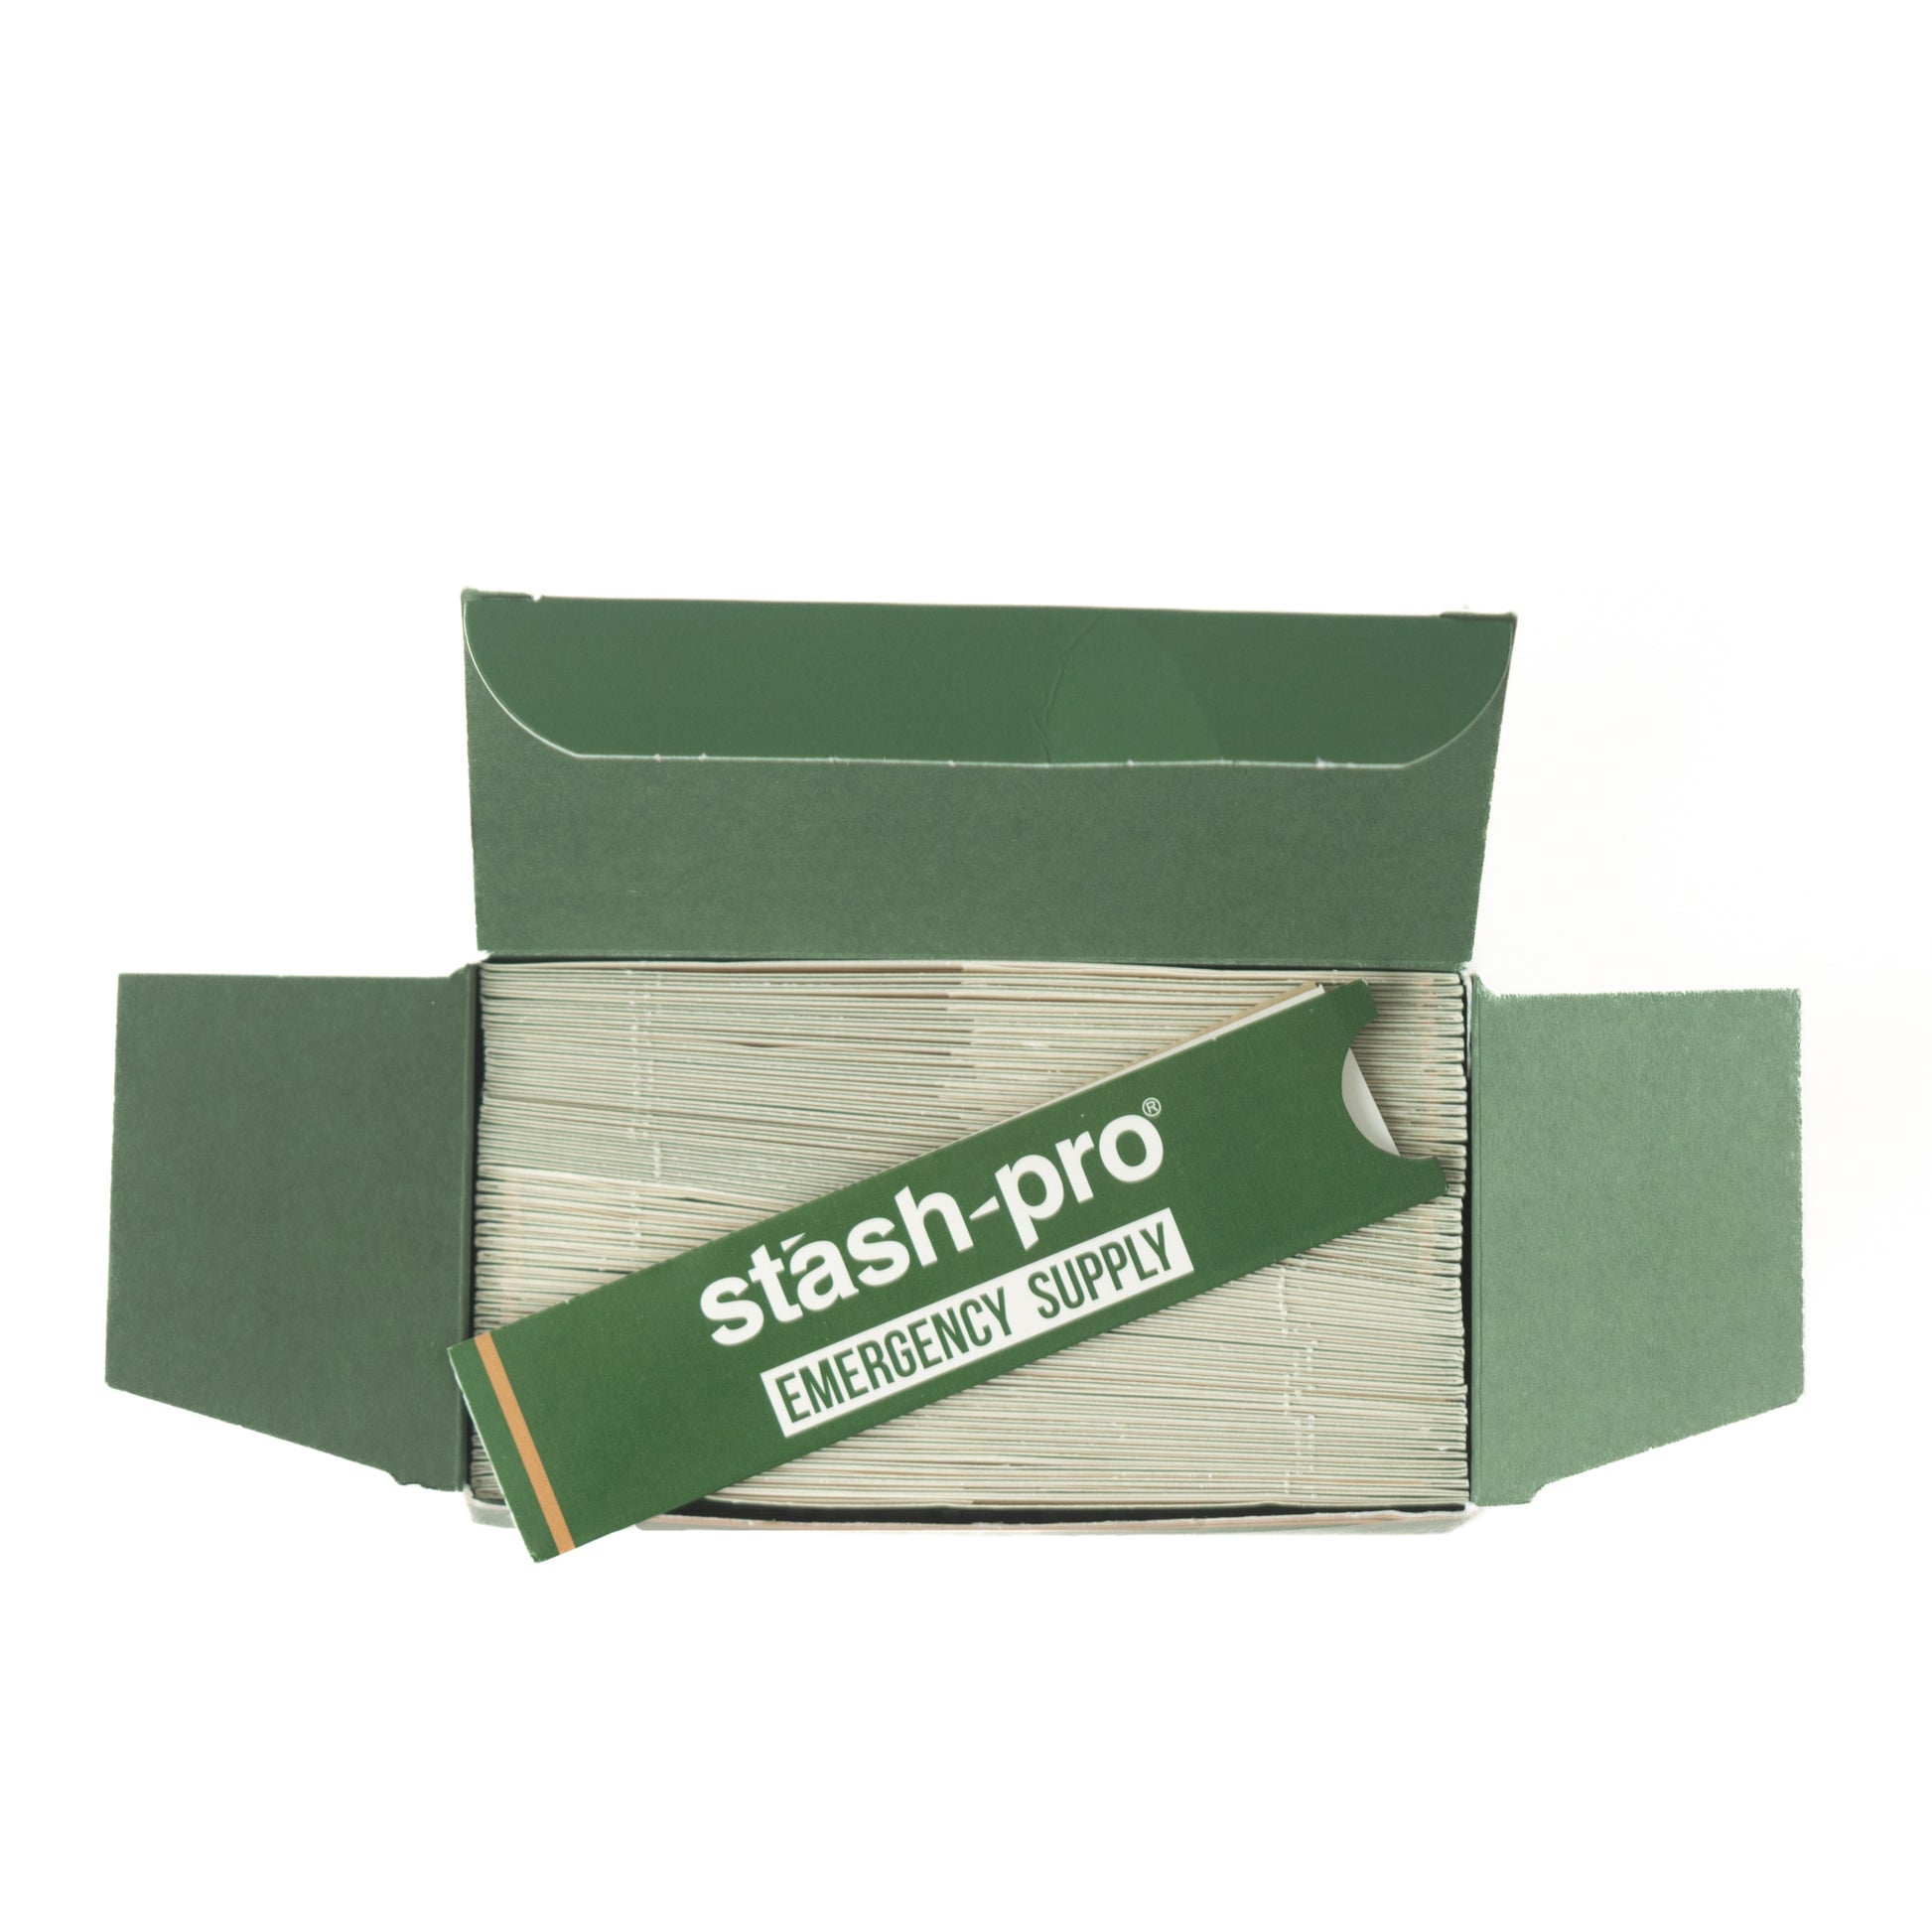 Stash Pro Emergency Supply 3x3 Thrice Pack - 50 Packs